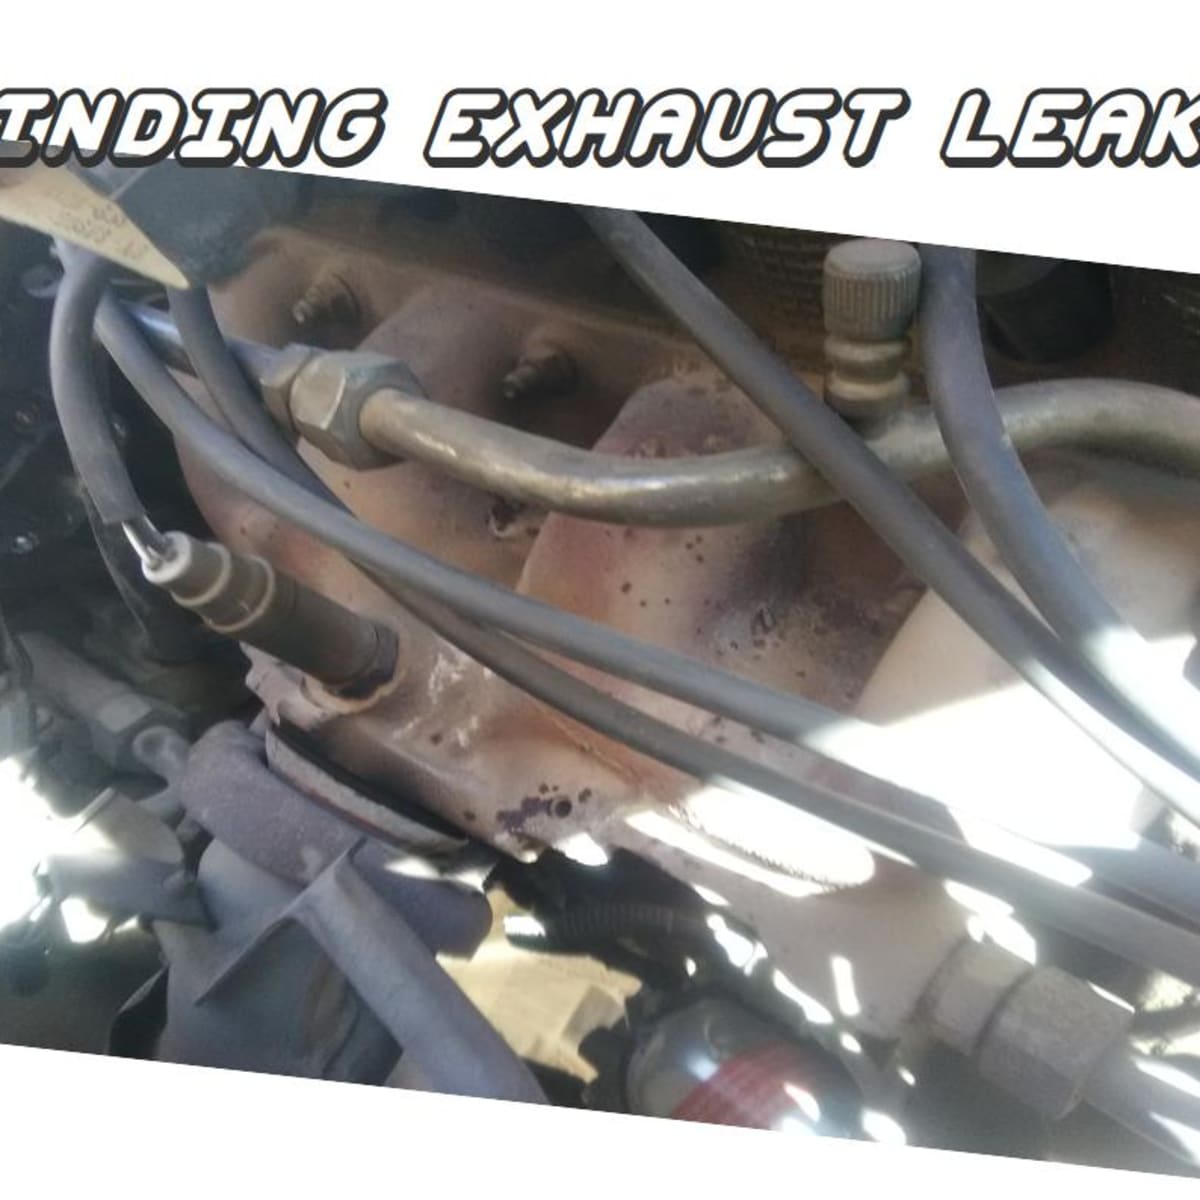 exhaust leak diagnosis